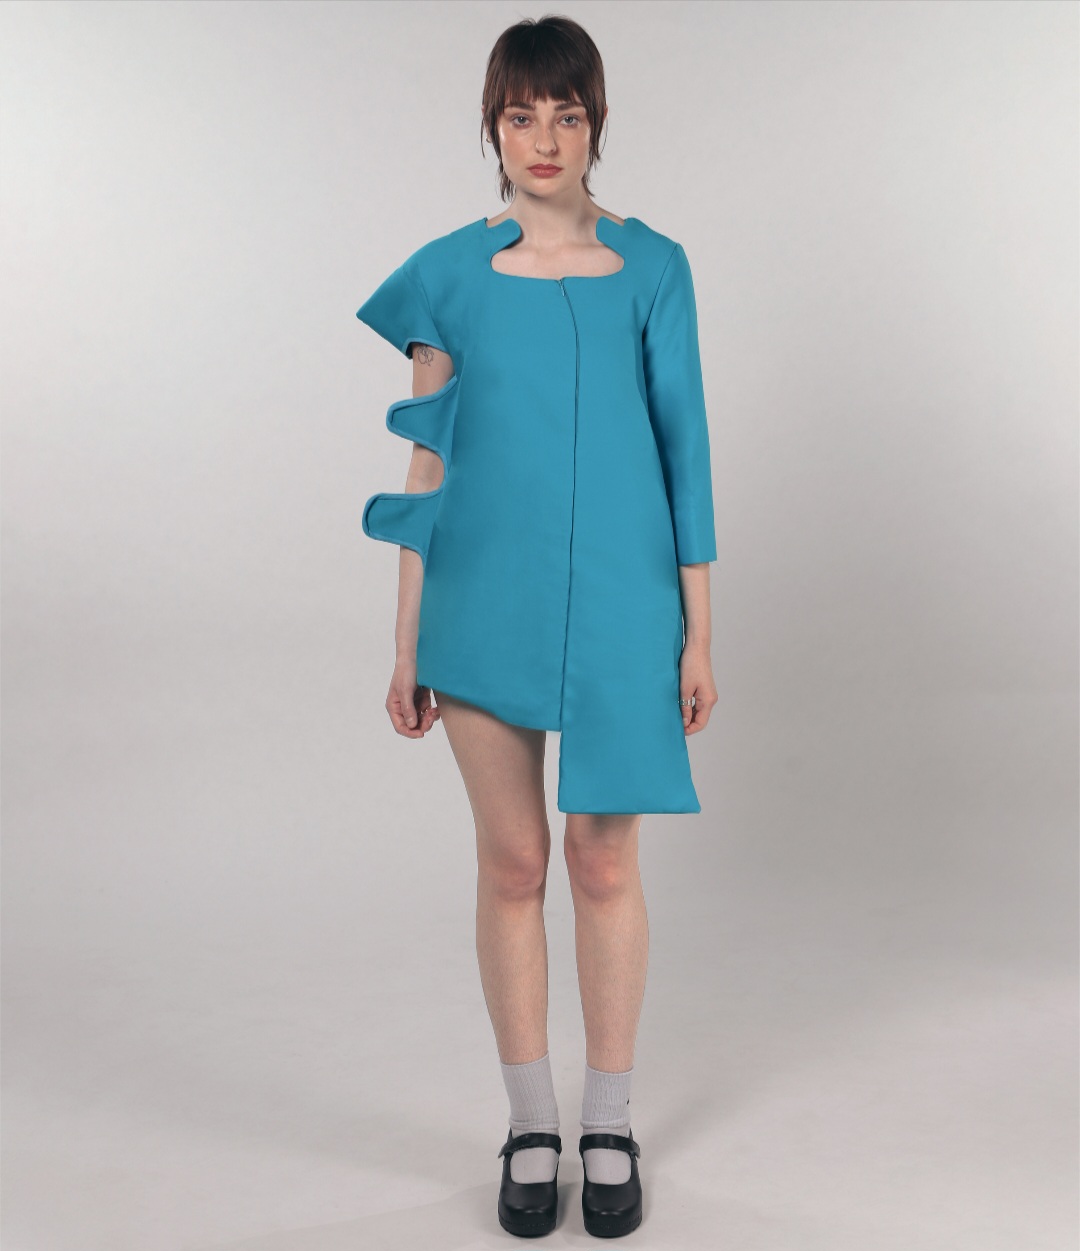 Jennifer Alice | Fashion & Textiles 2